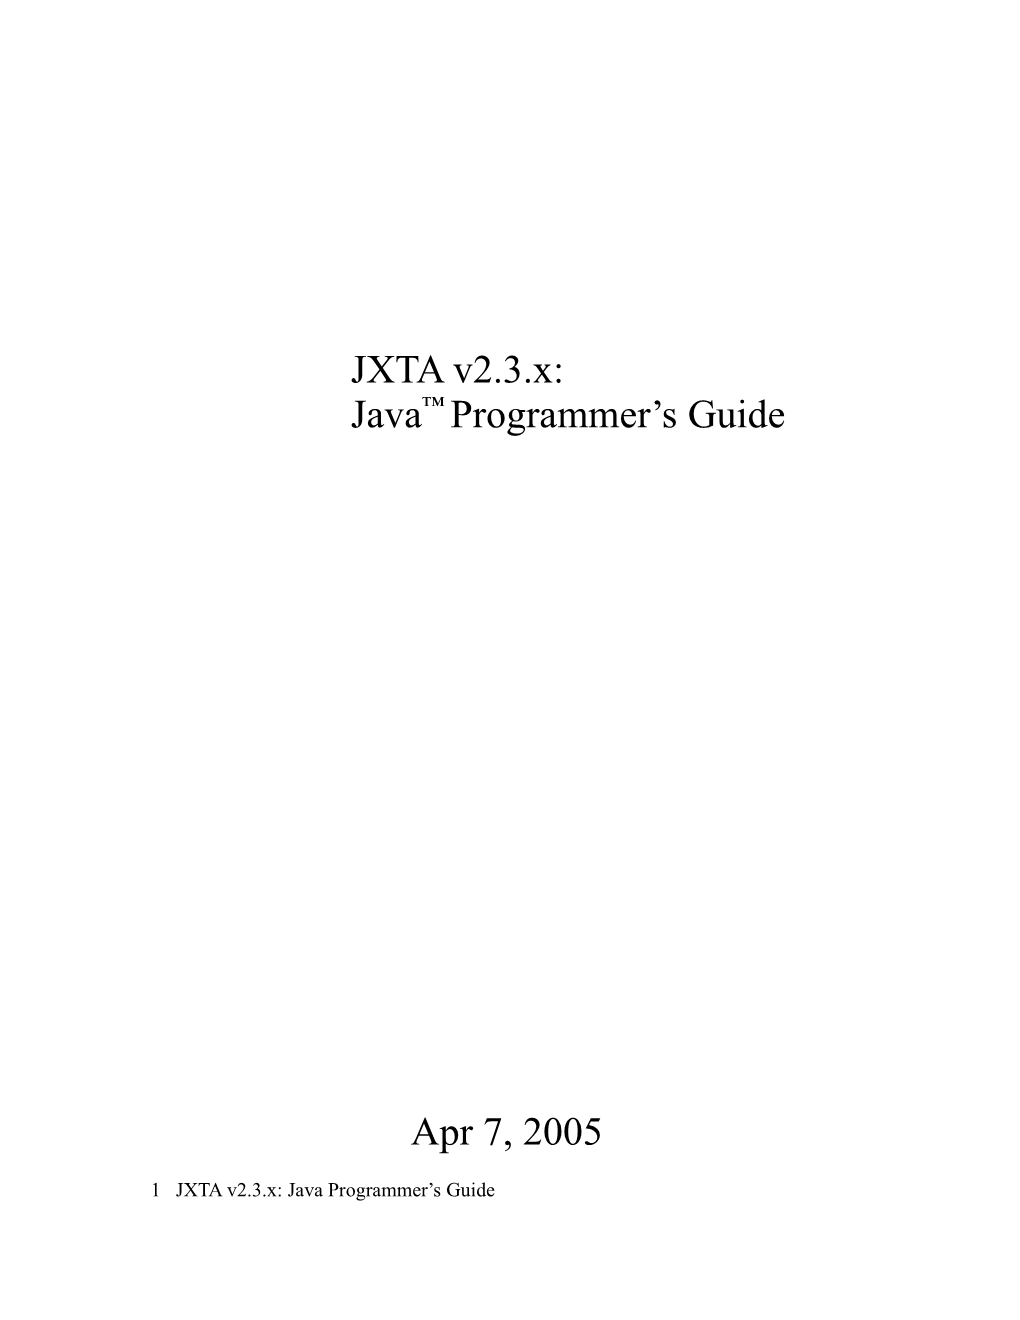 JXTA V2.3.X: Java™ Programmer's Guide Apr 7, 2005